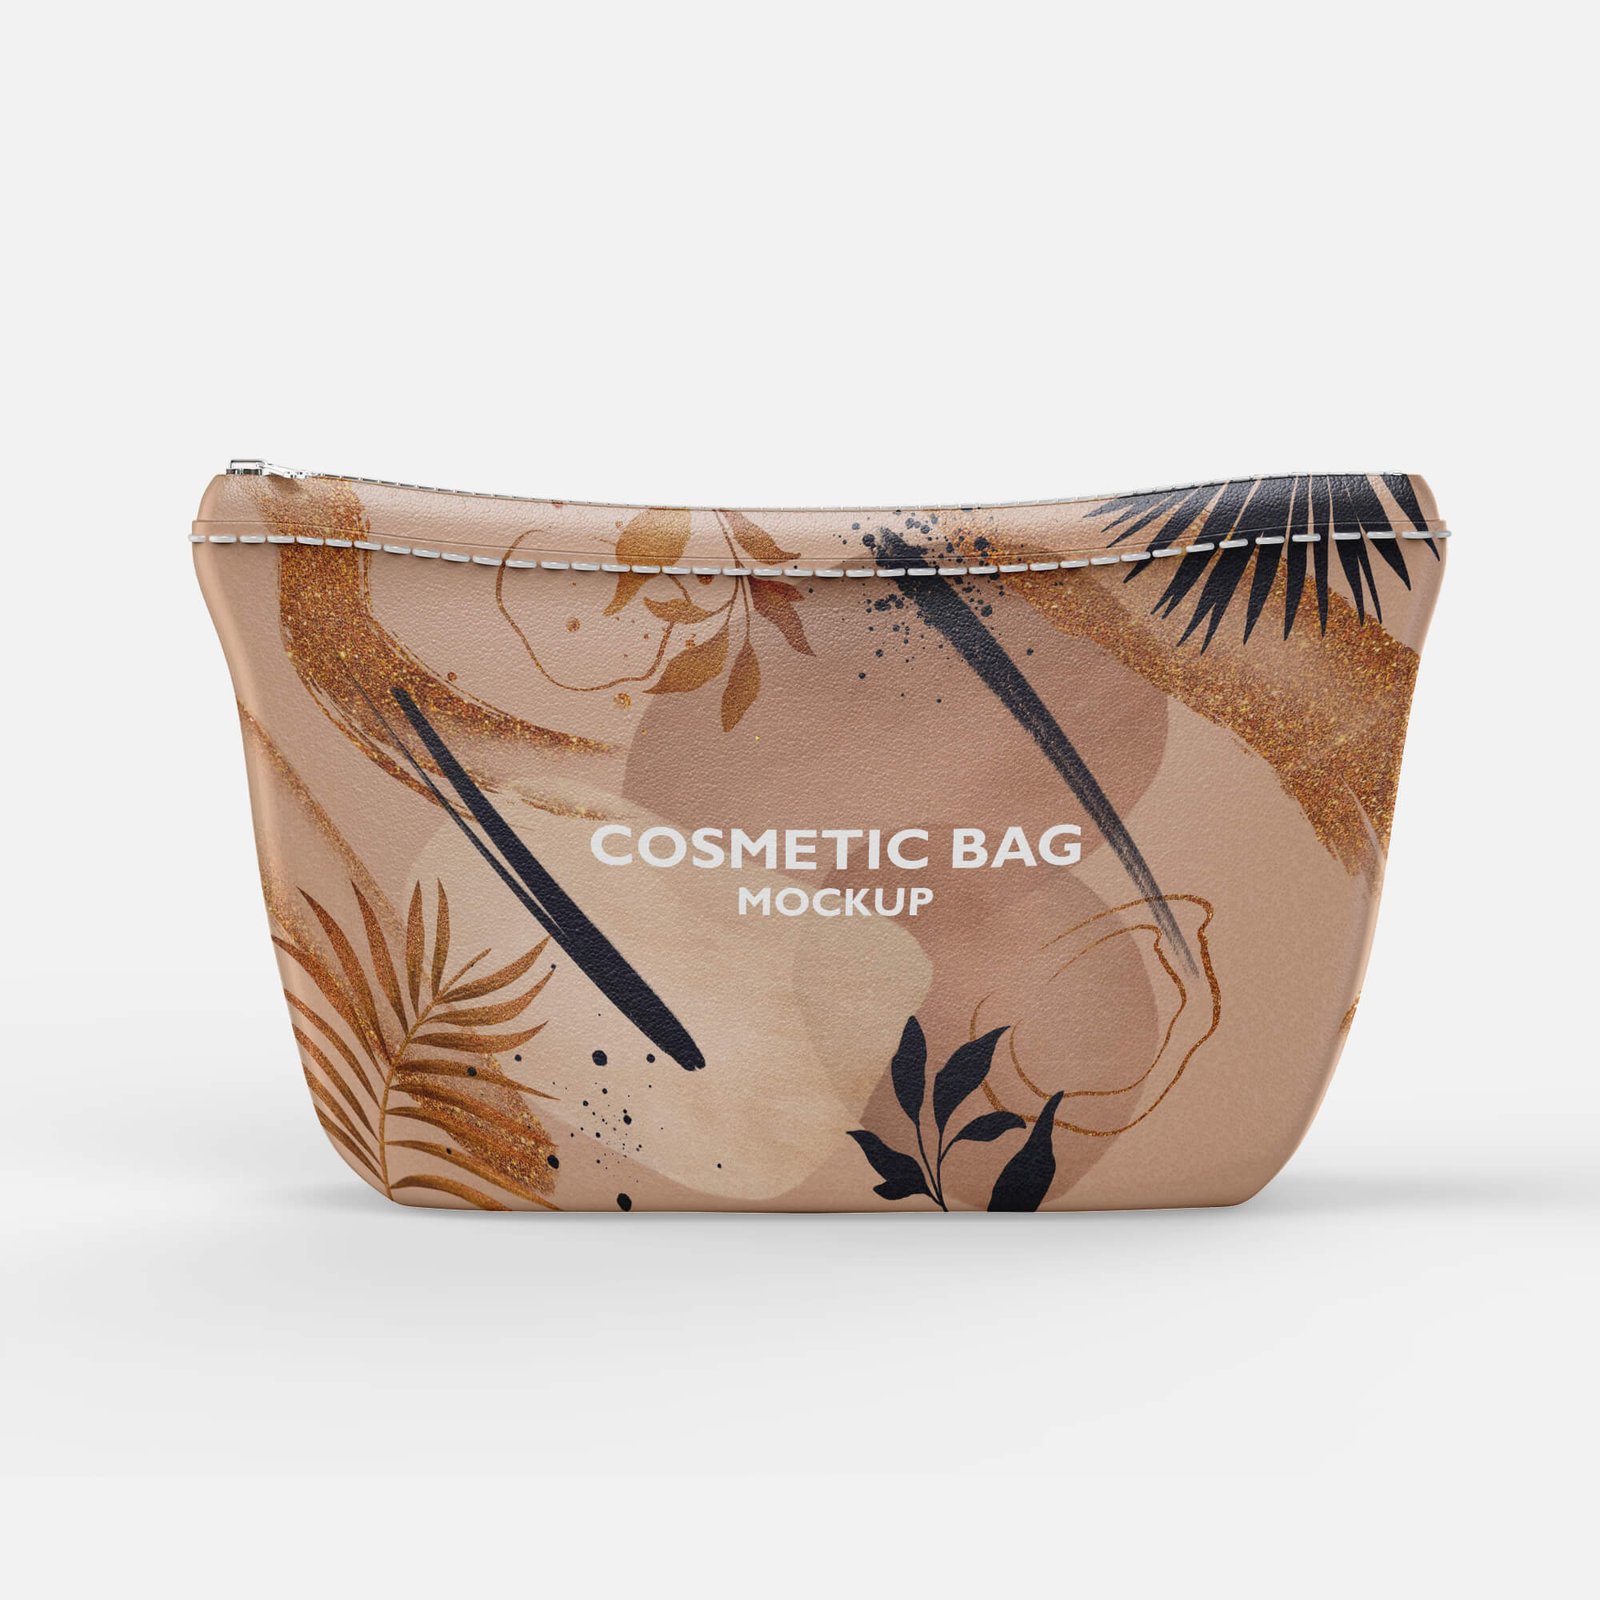 Design Free Cosmetic Bag Mockup PSD Template